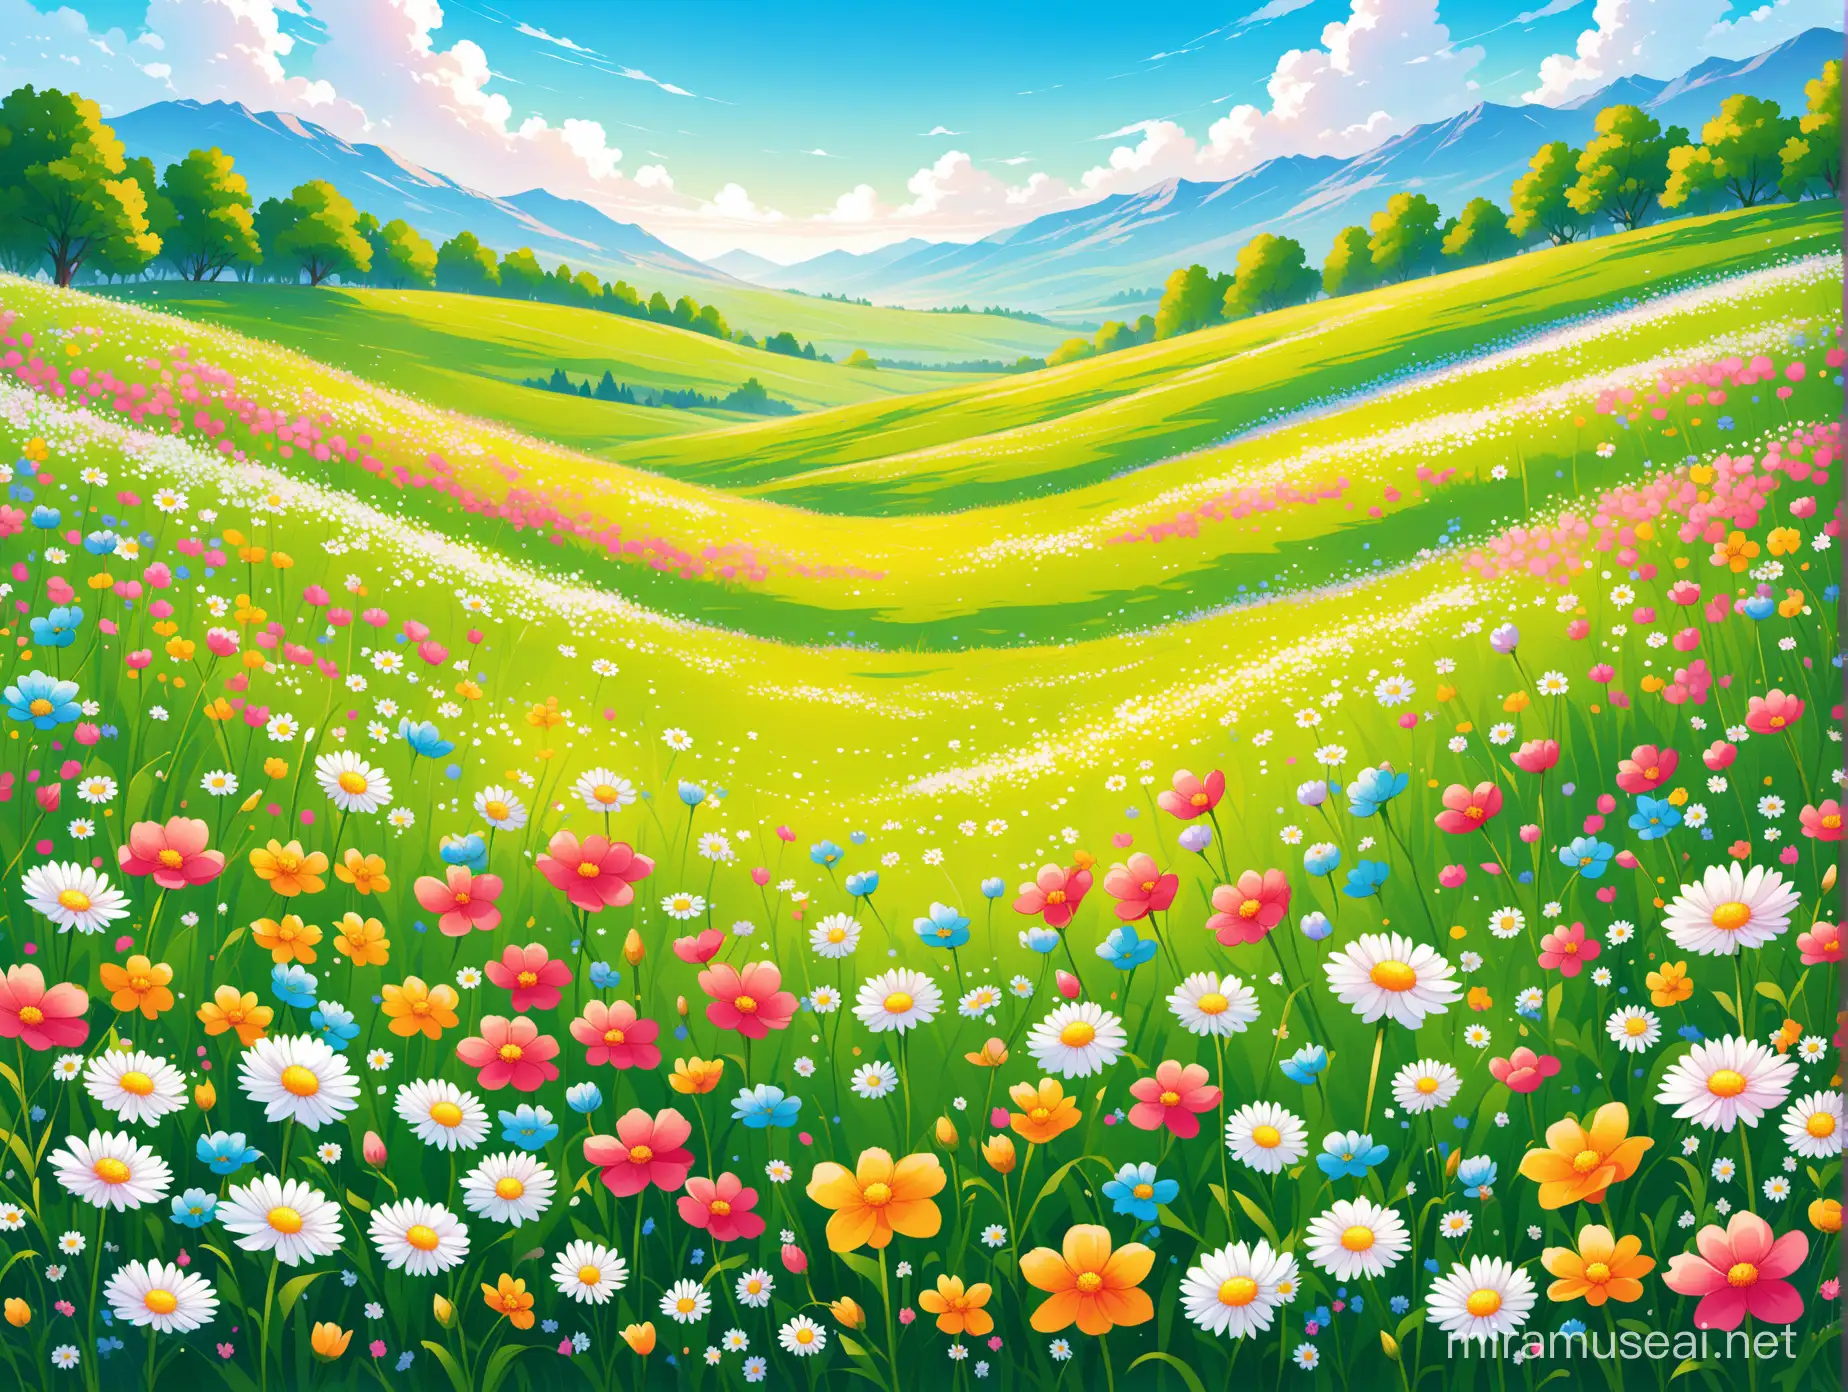 Vibrant Spring Flower Meadow Illustration